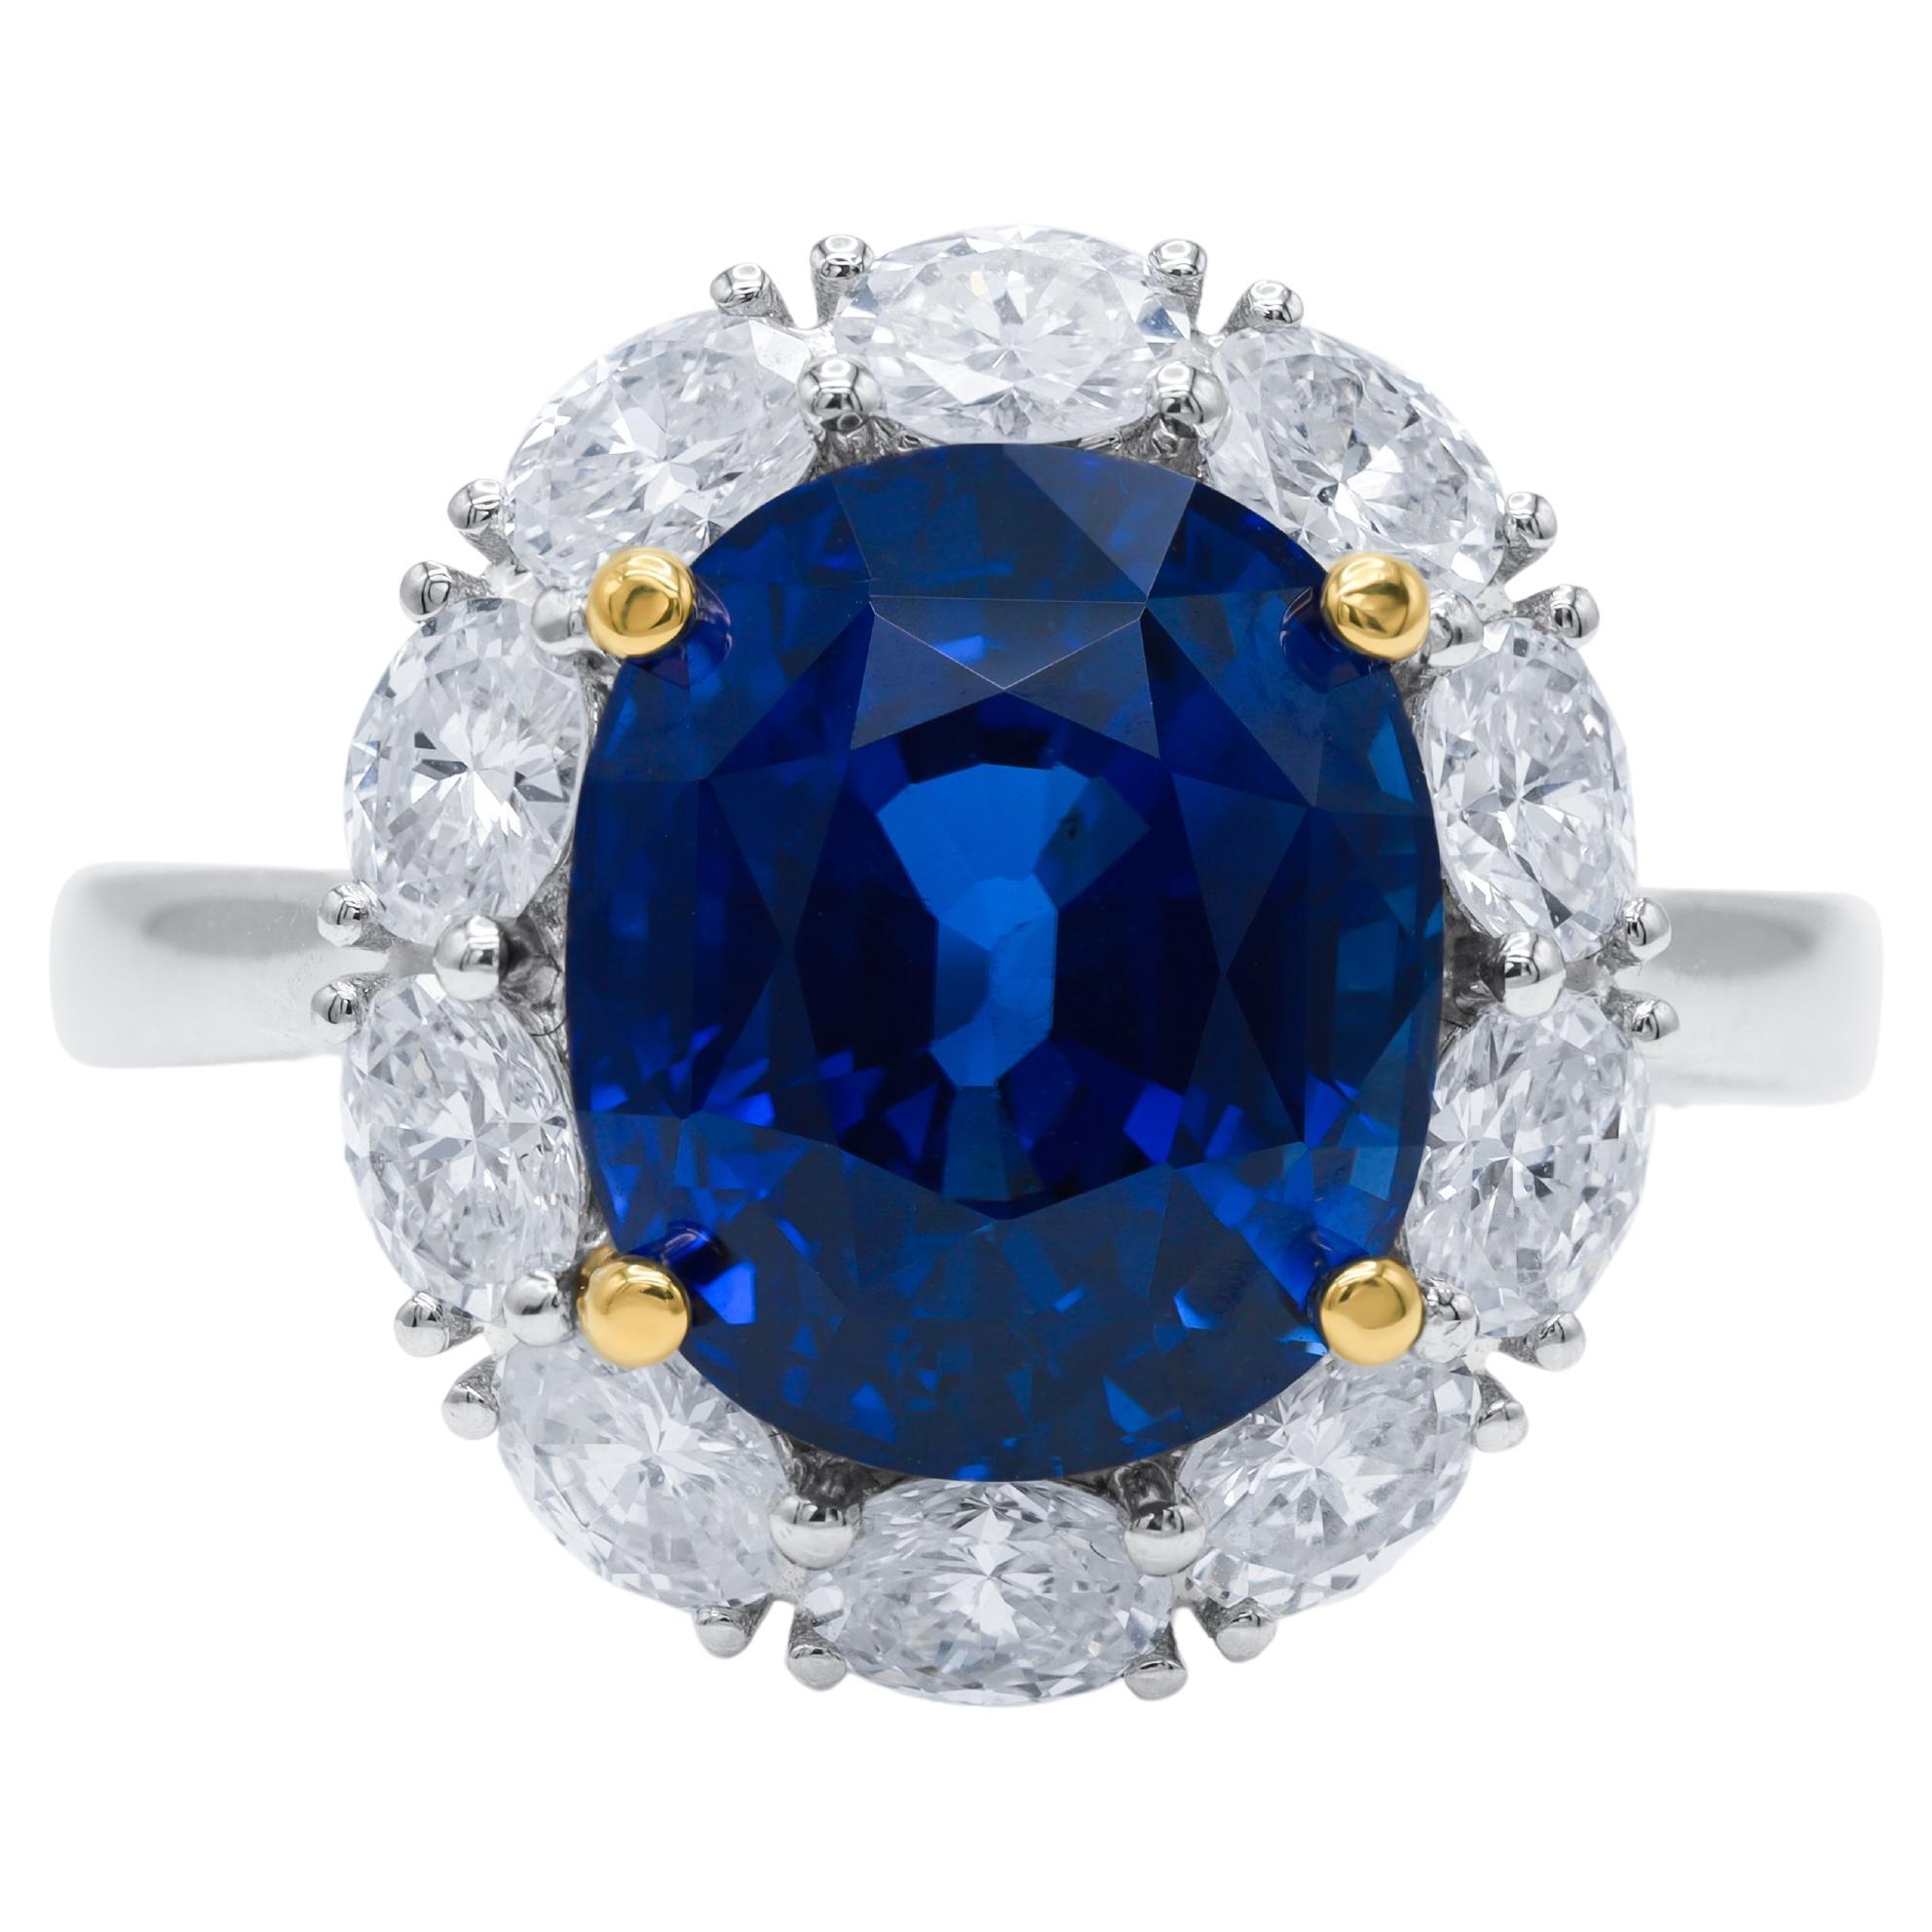 Diana M. Platinum sapphire and diamond Princess Diana ring featuring a 7.94 ct 